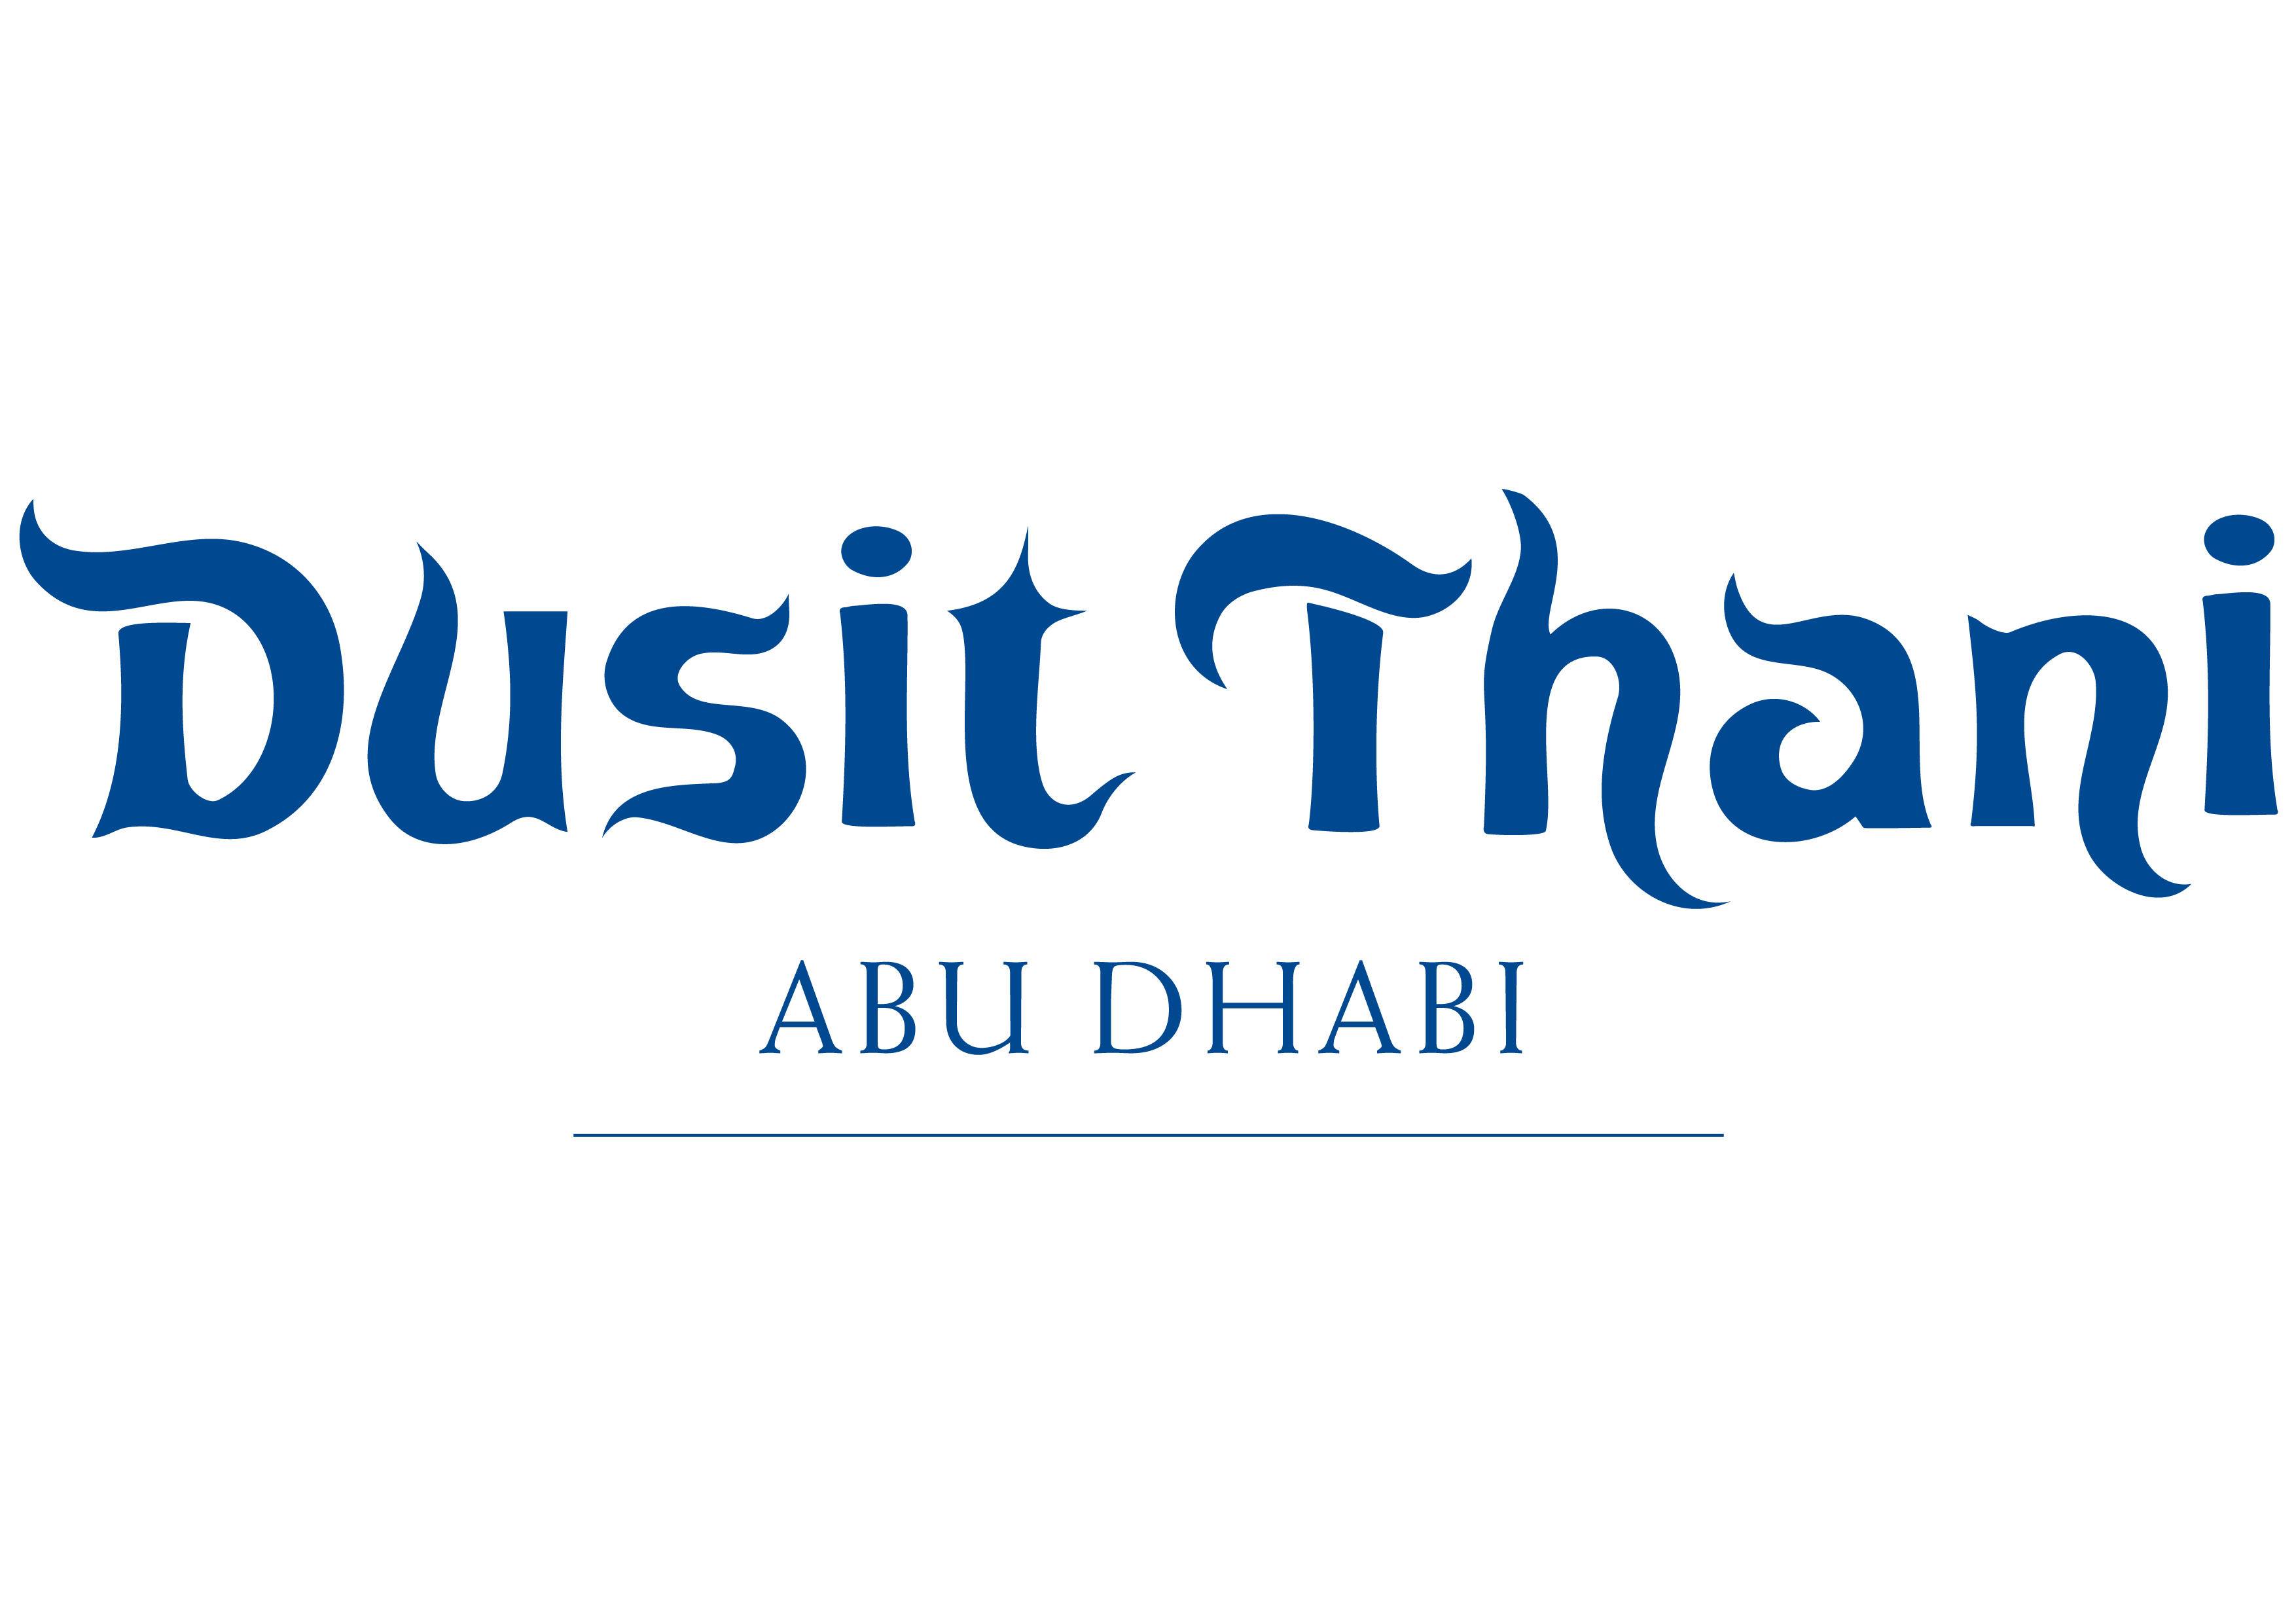 Dusit Thani Abu Dhabi